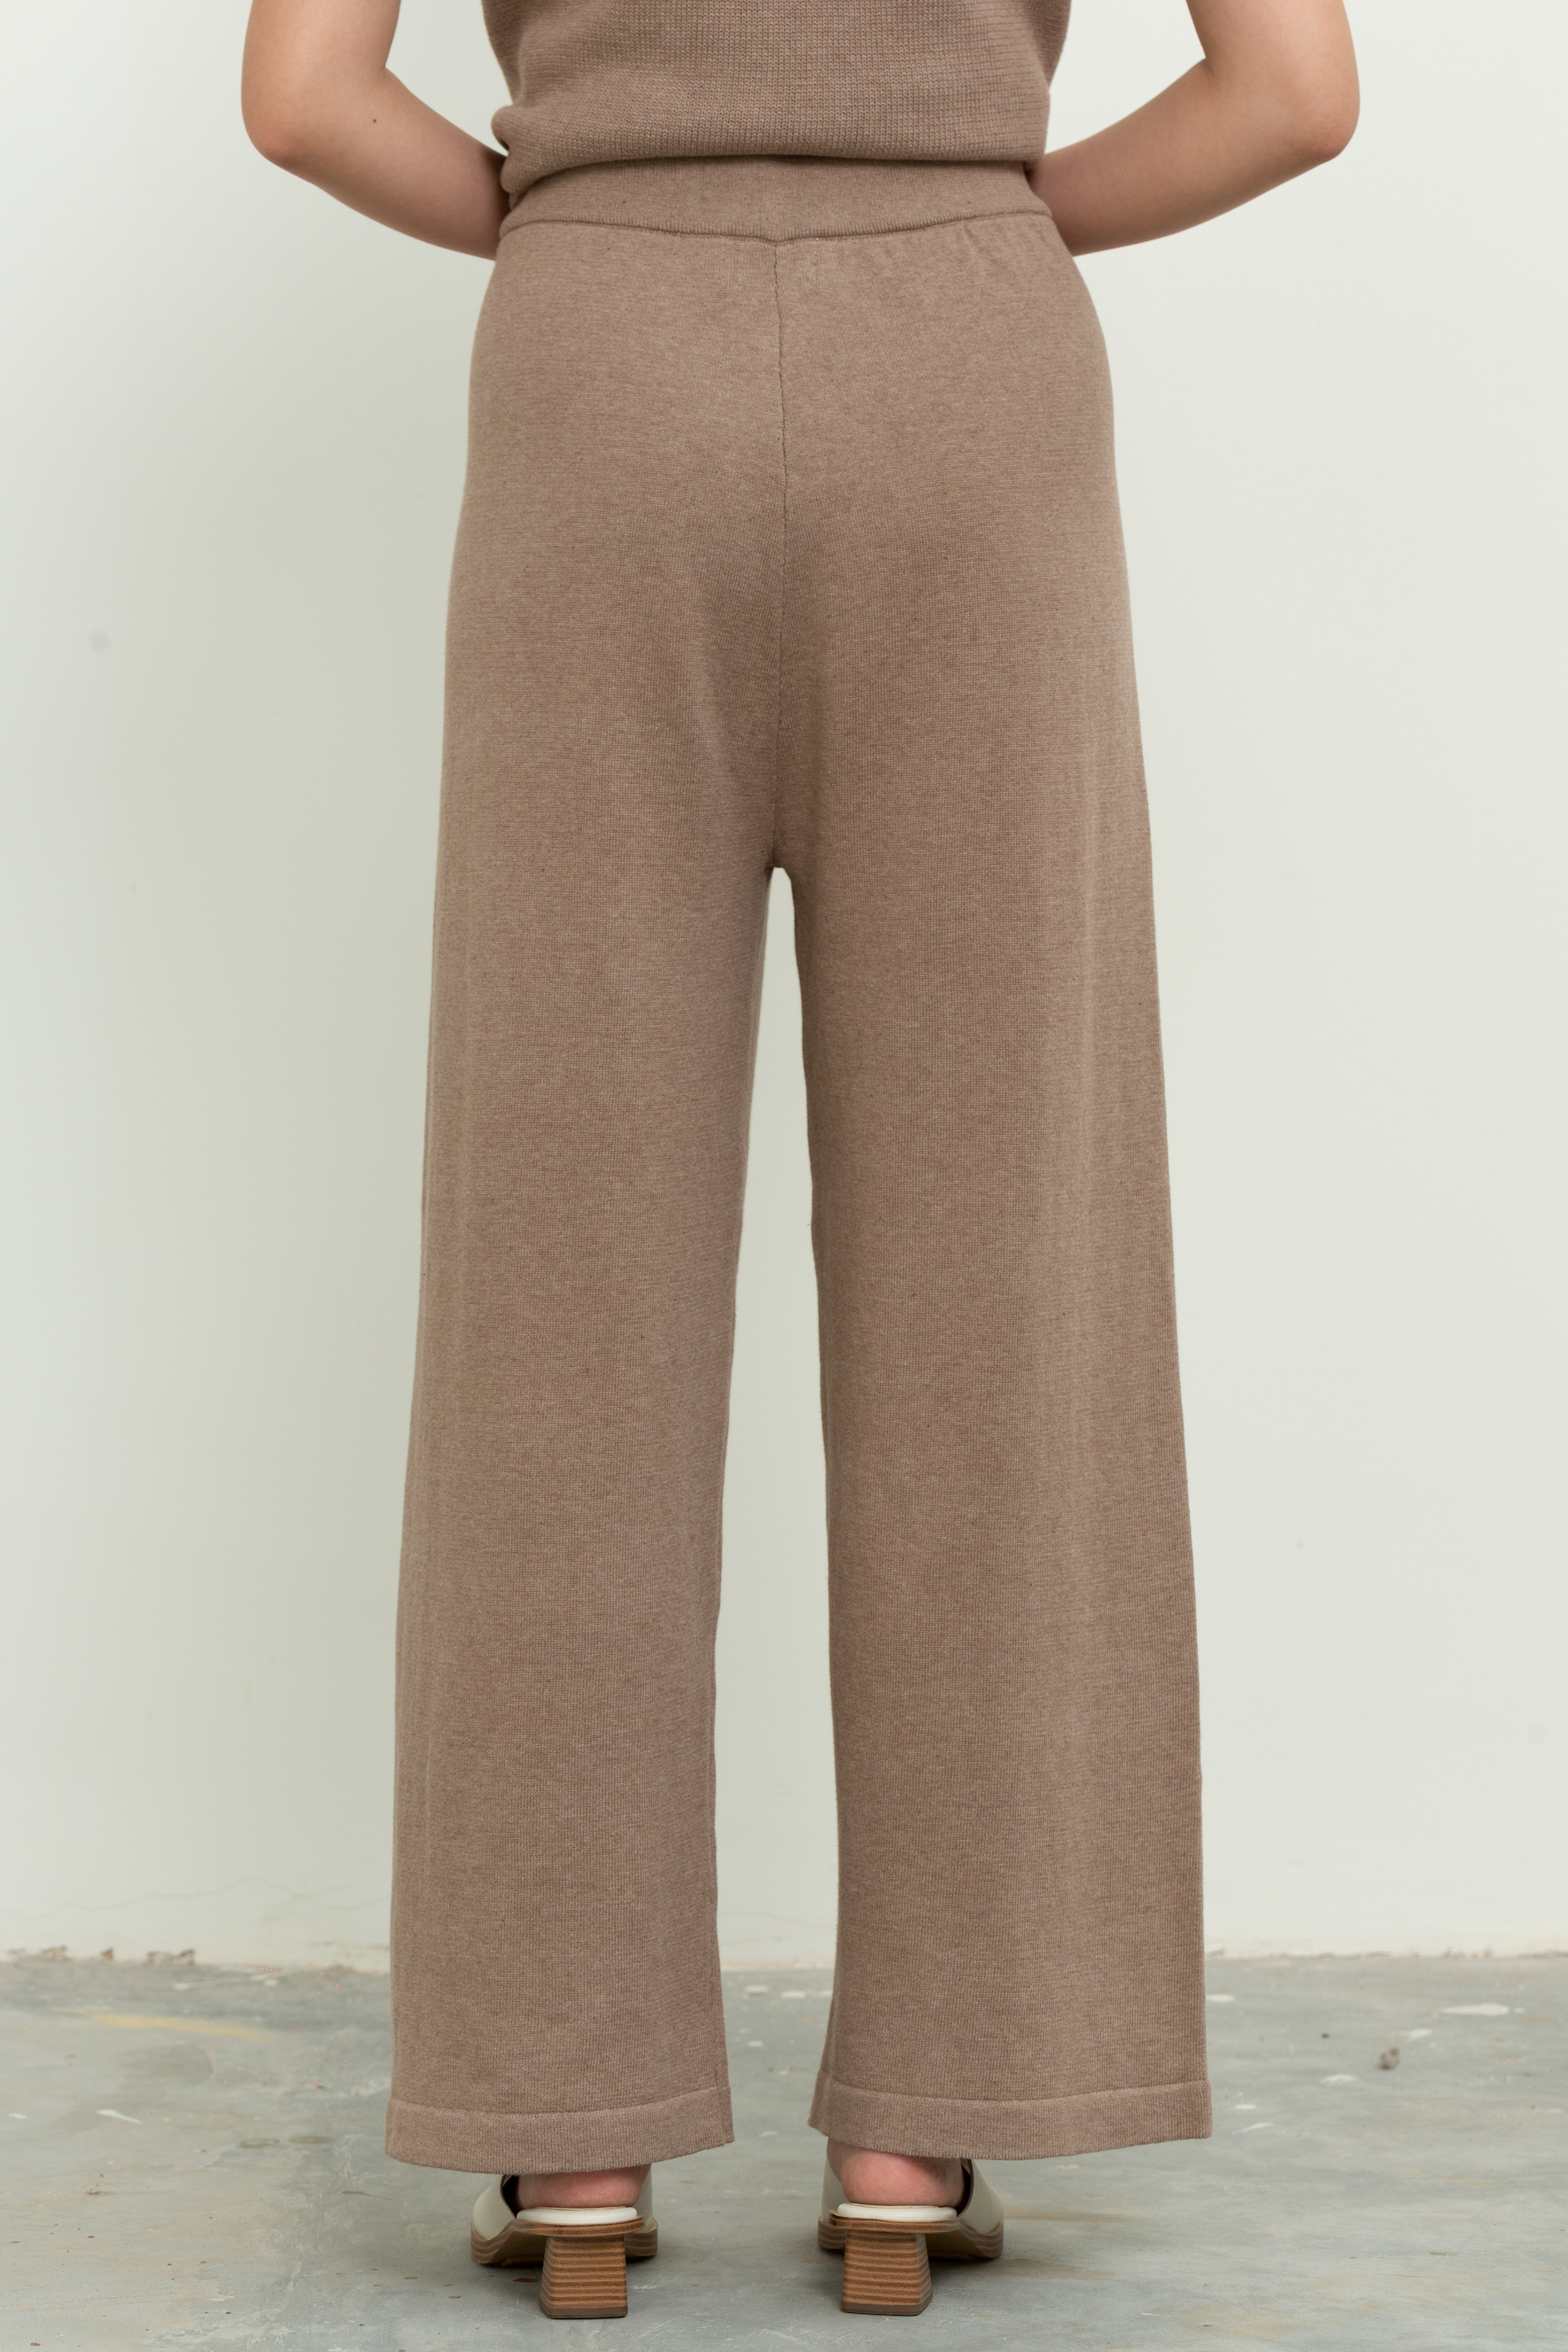 Knit Long Pants in Brown